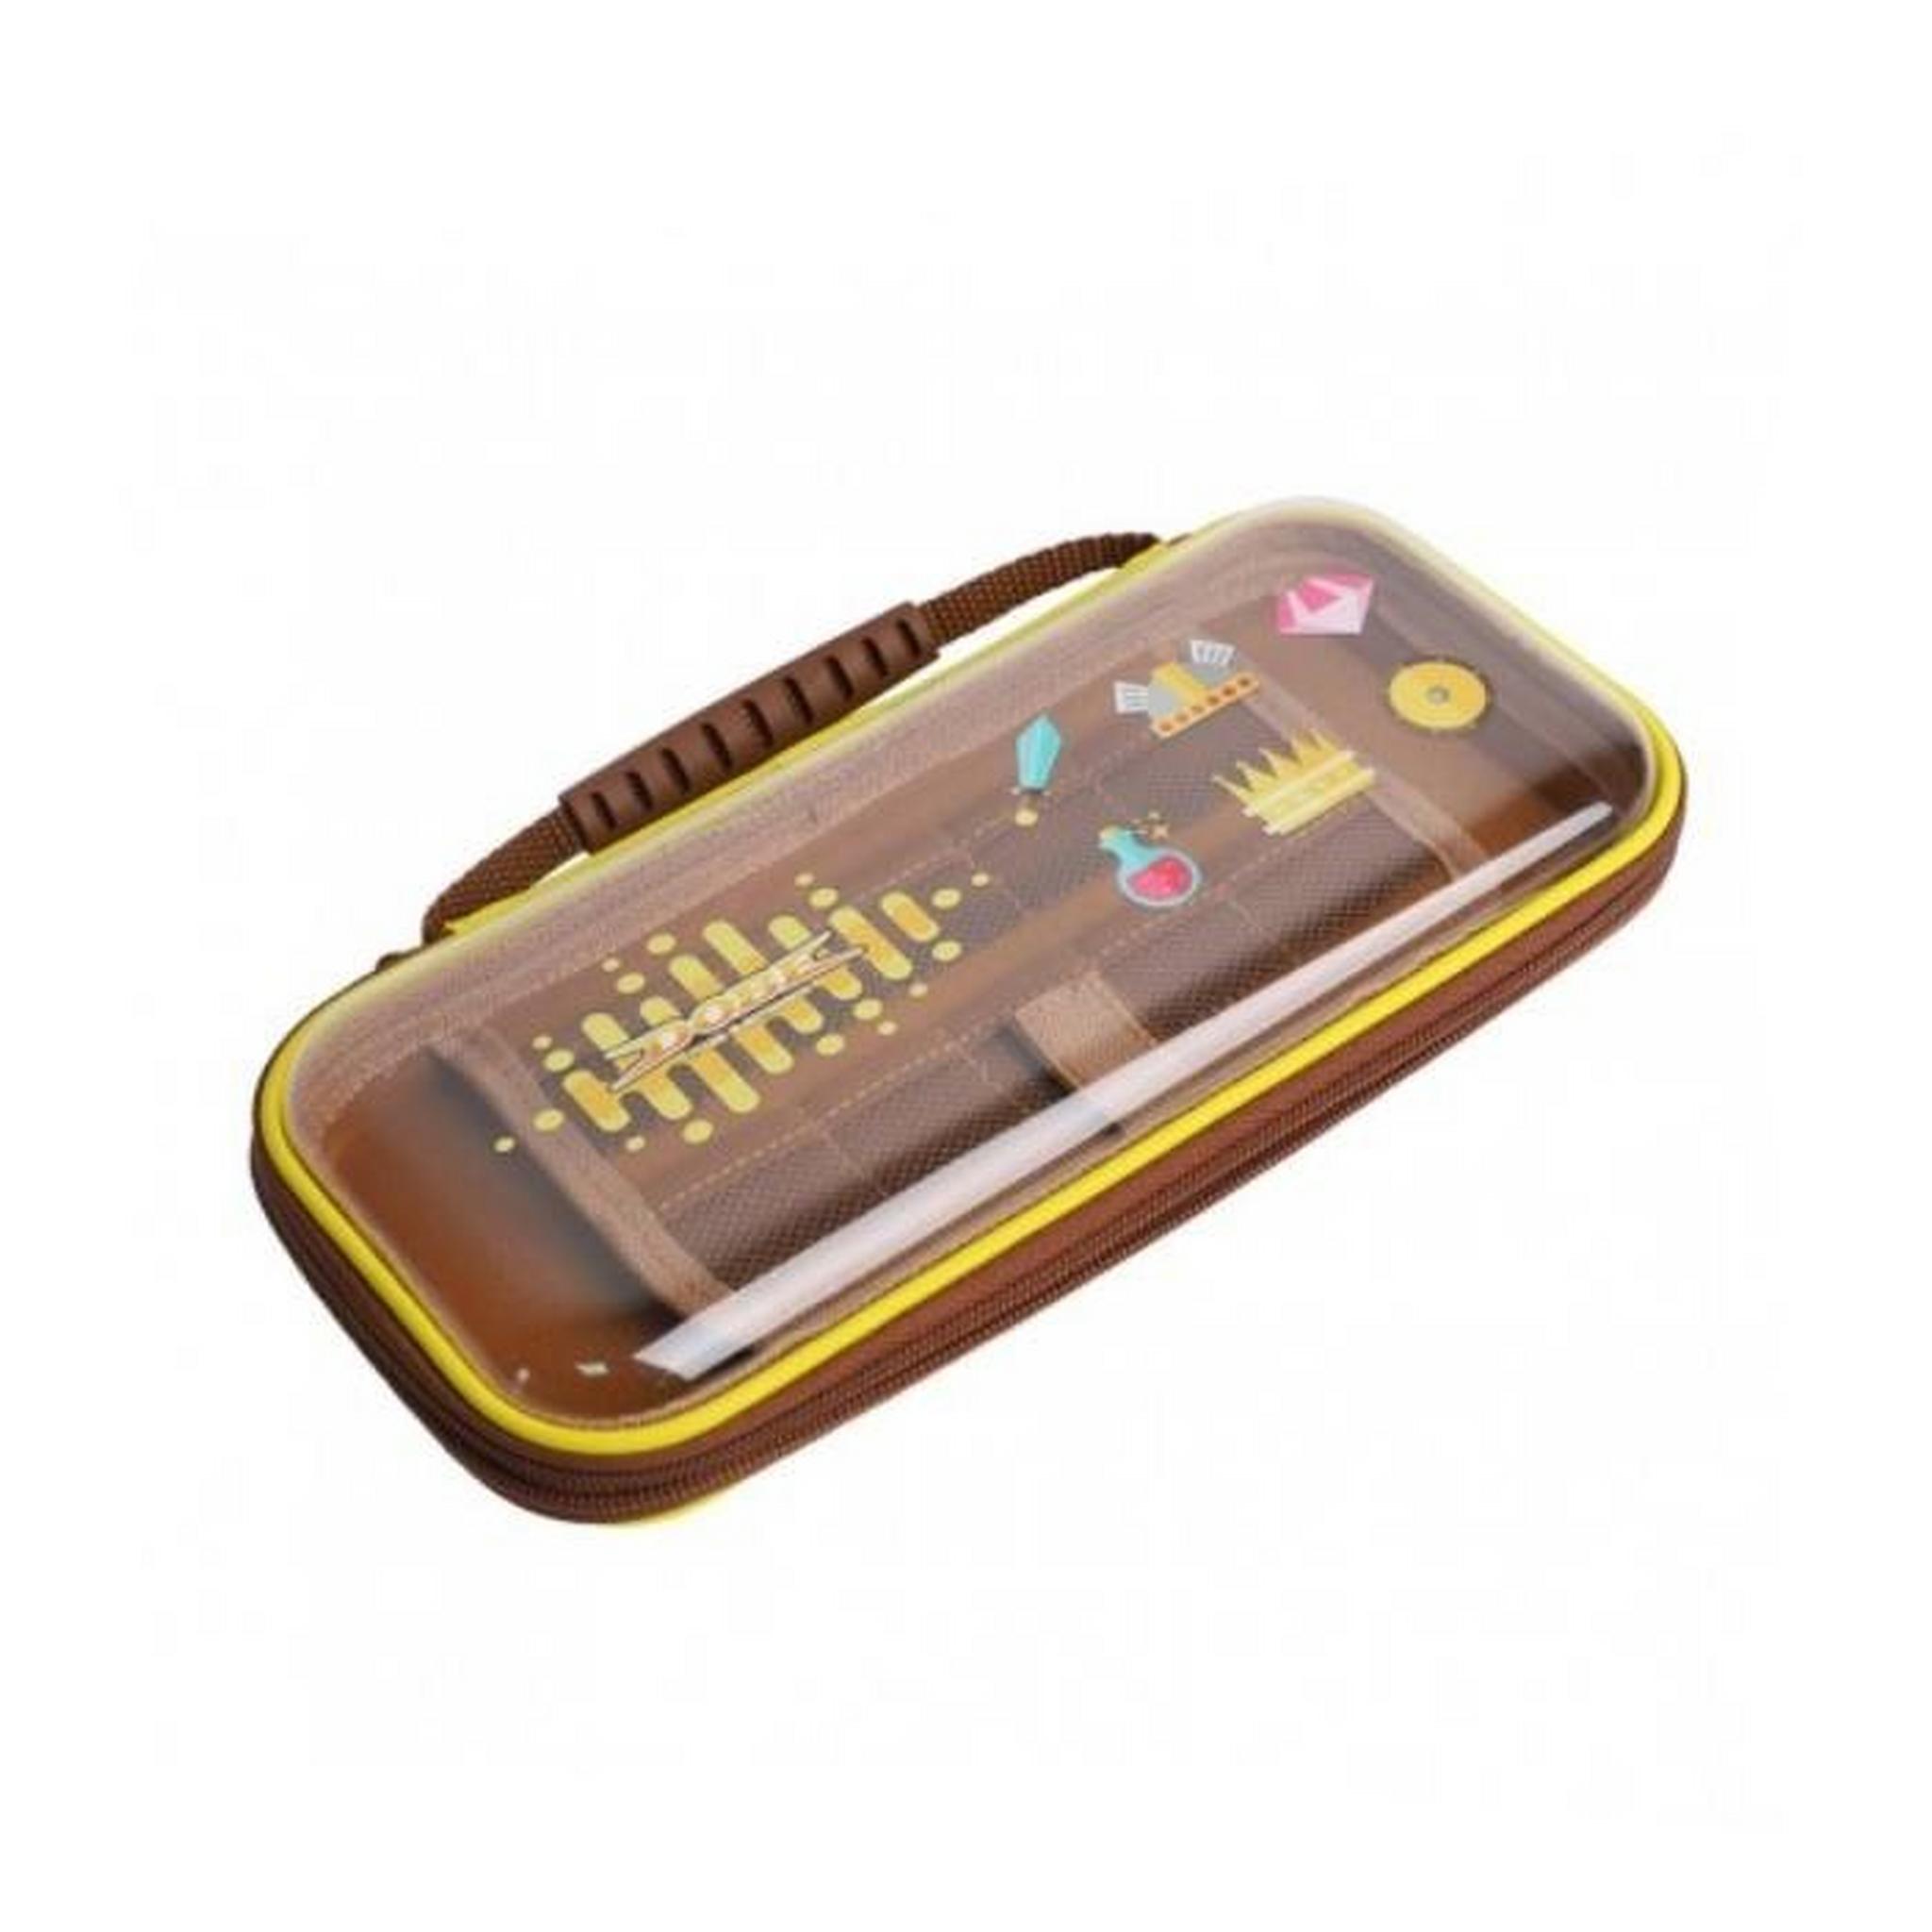 Dobe Nintendo Switch OLED Portable Case, TNS-1157 – Yellow